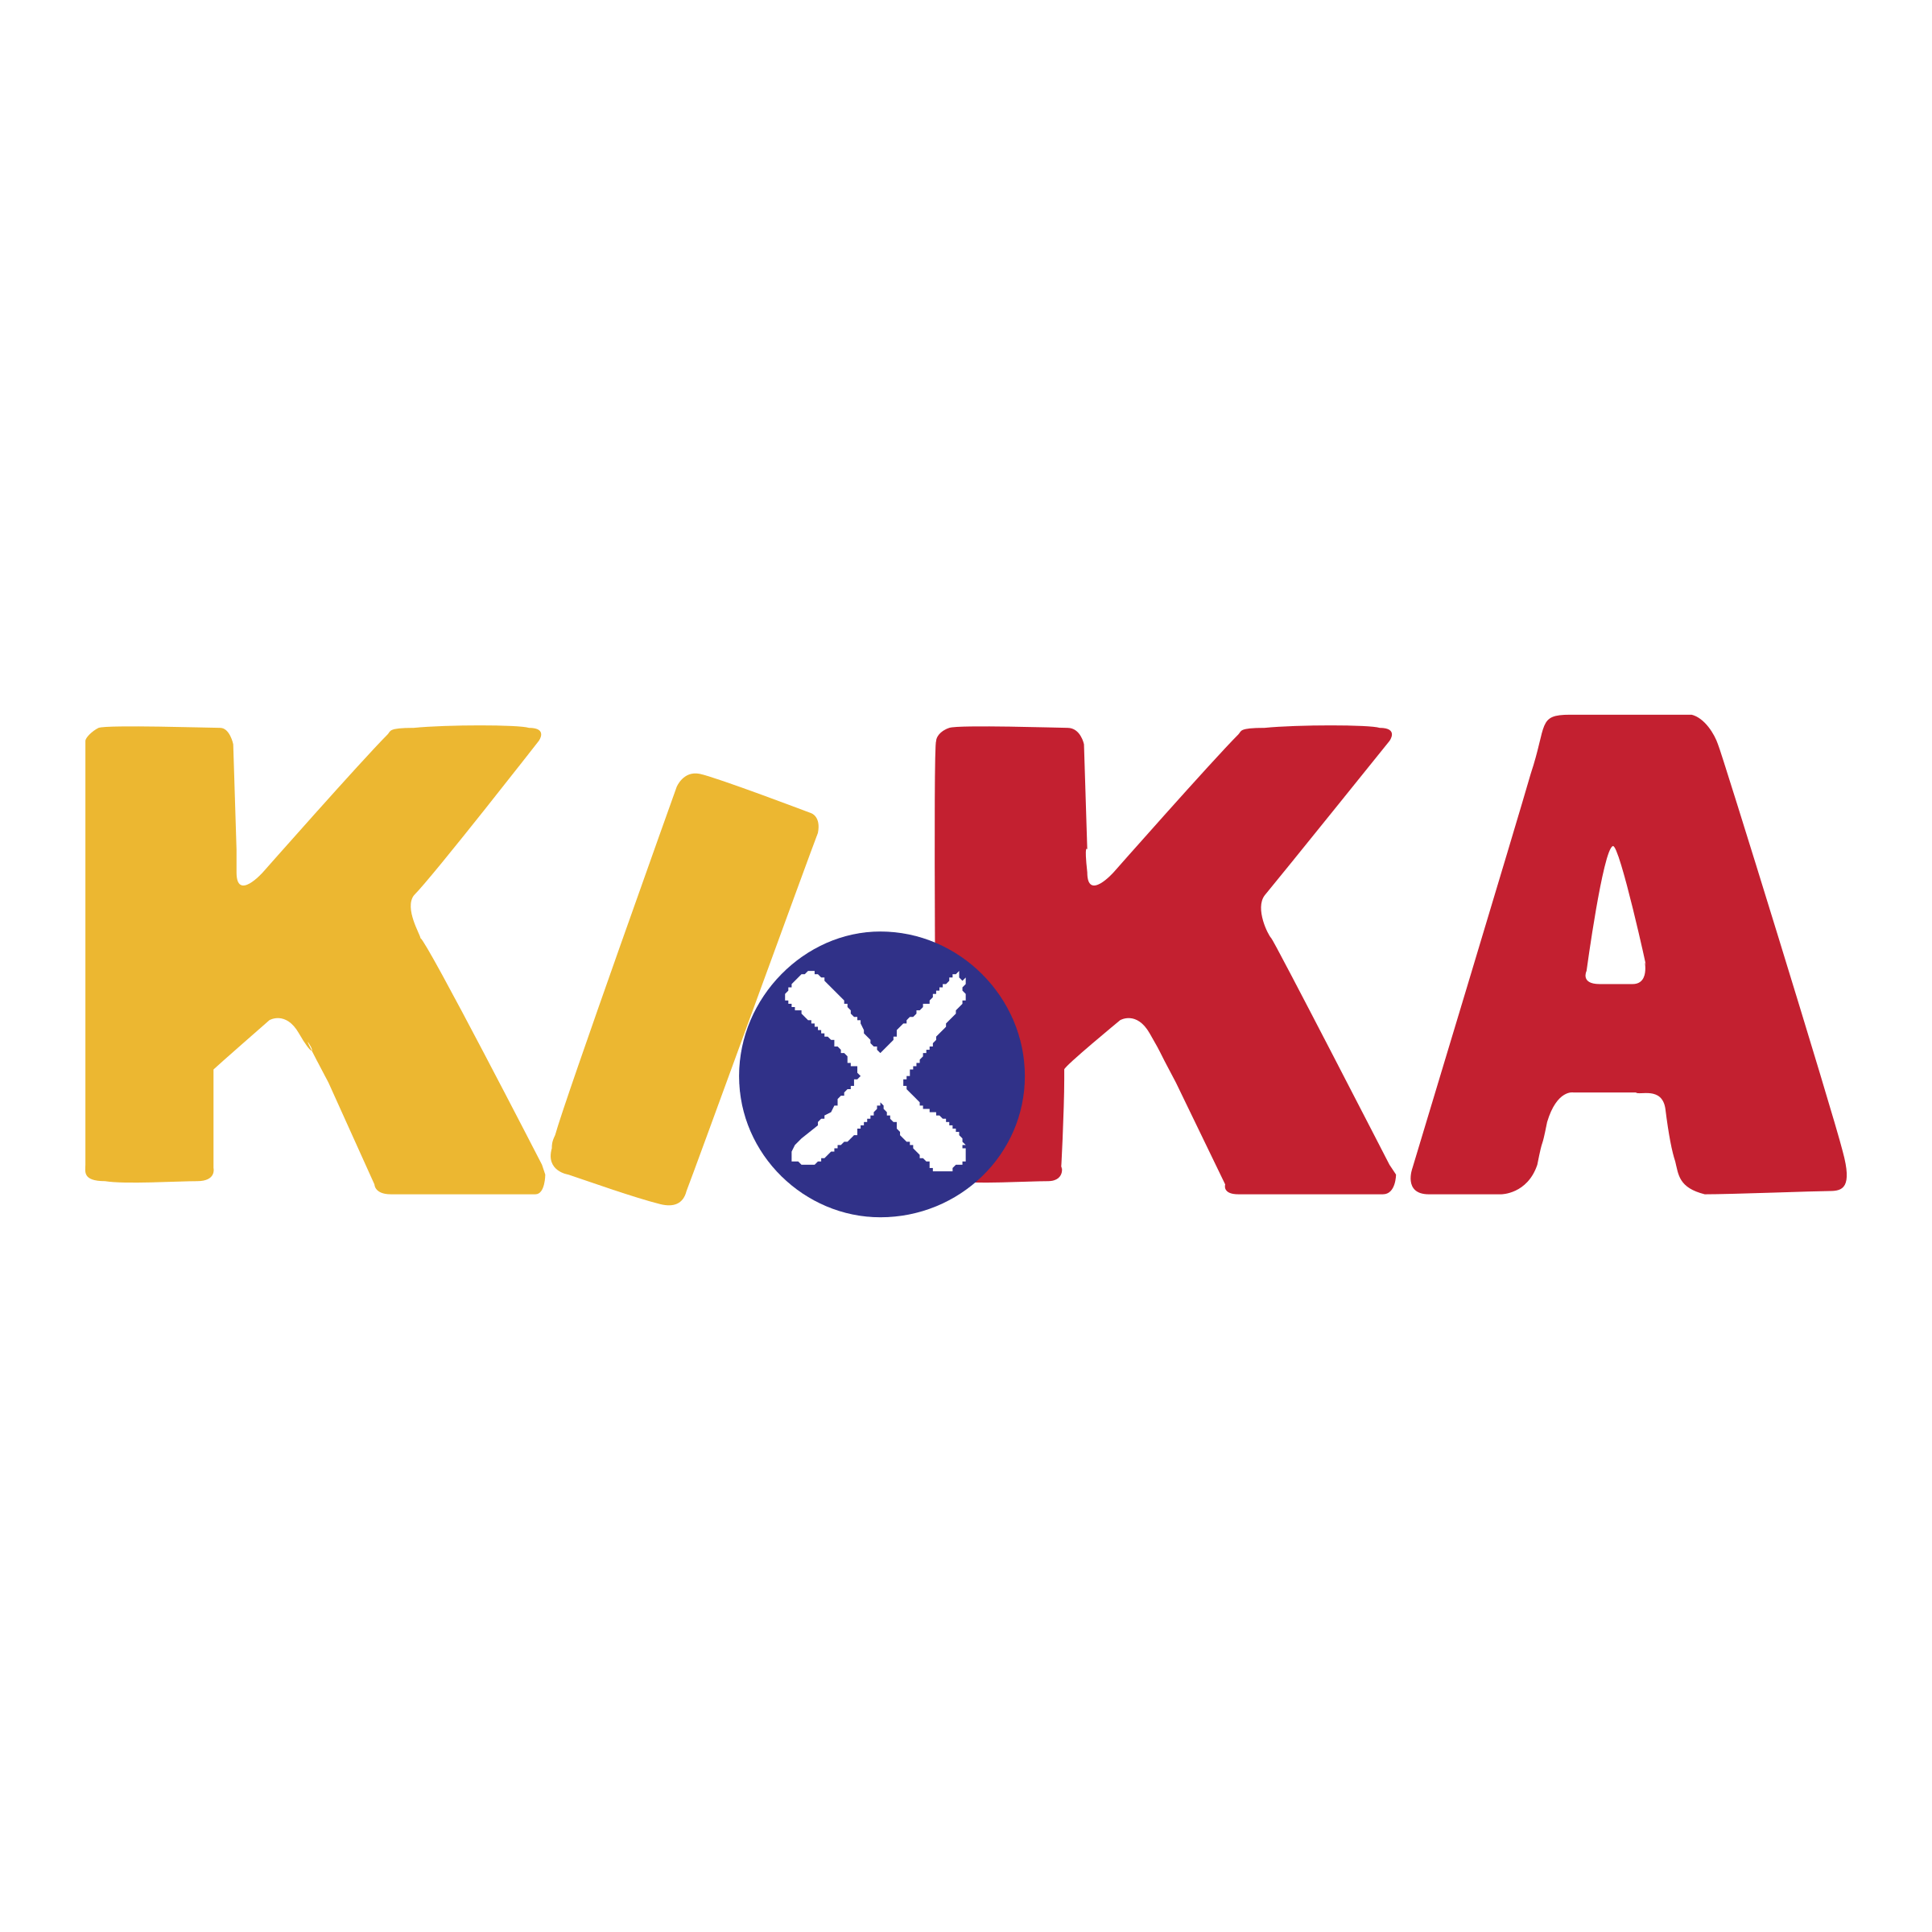 Kika Logo - Kika Logo PNG Transparent & SVG Vector - Freebie Supply